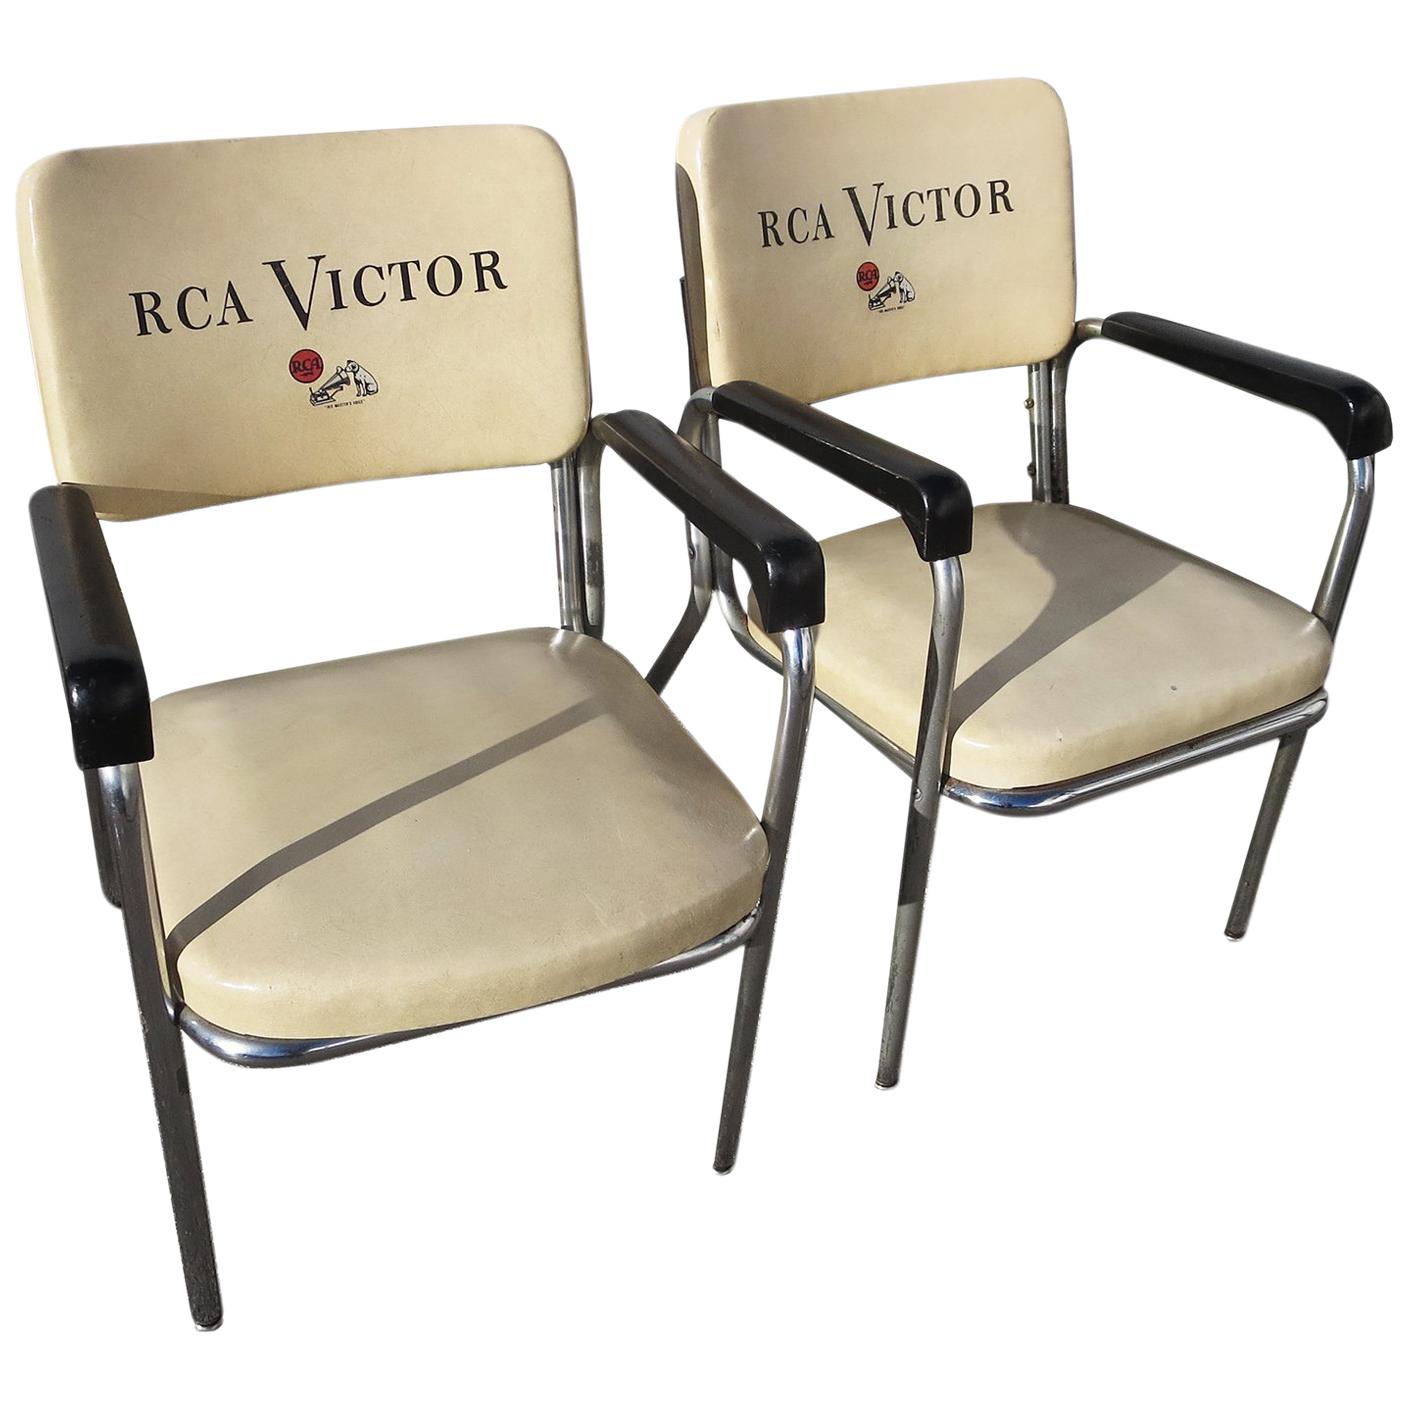 RCA Victor Tubular Chrome Chairs For Sale